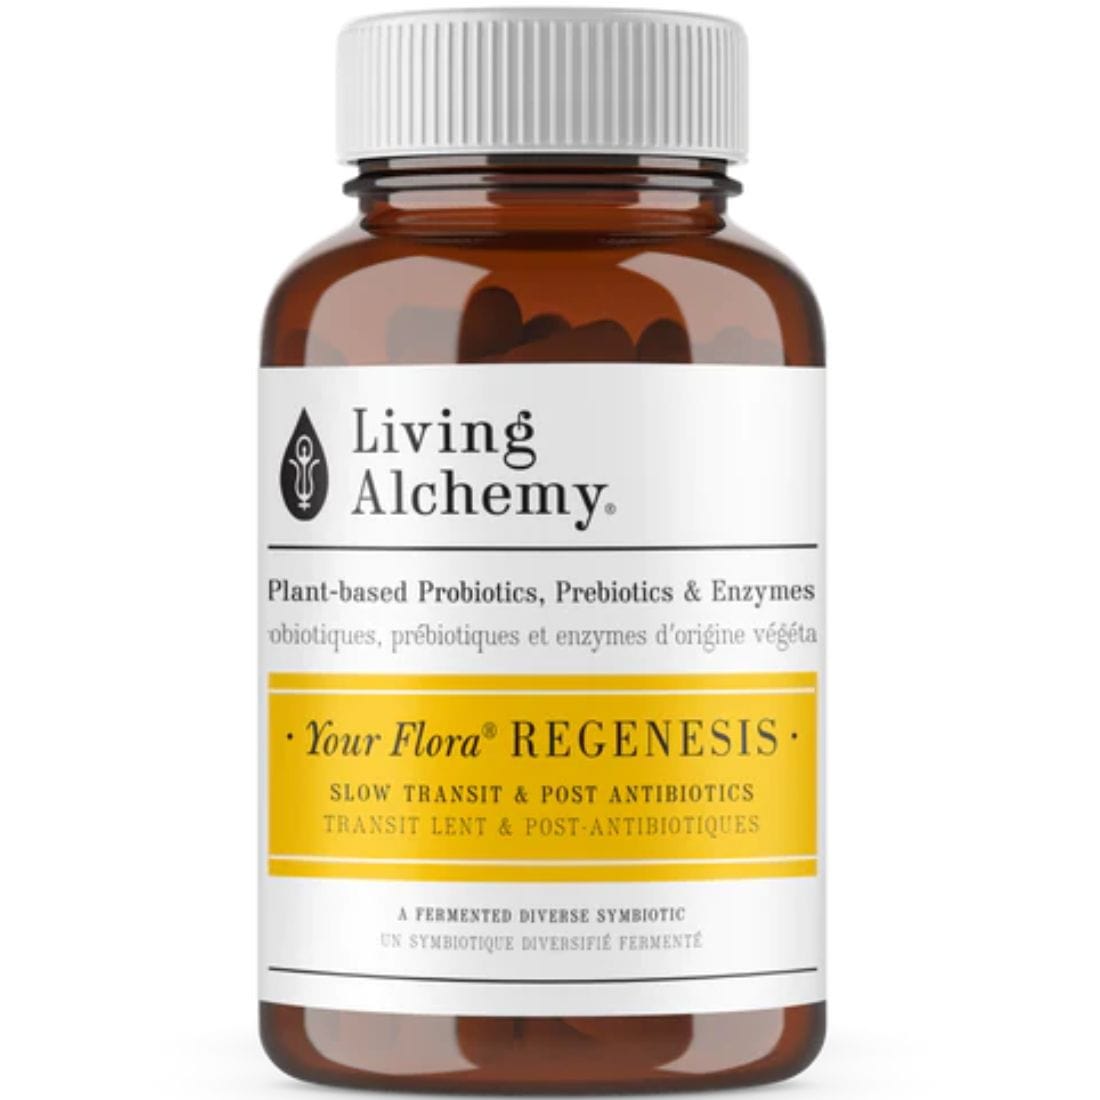 Living Alchemy Your Flora Regenesis, Rebuild gut flora after antibiotics, Slow/infrequent bowl movements